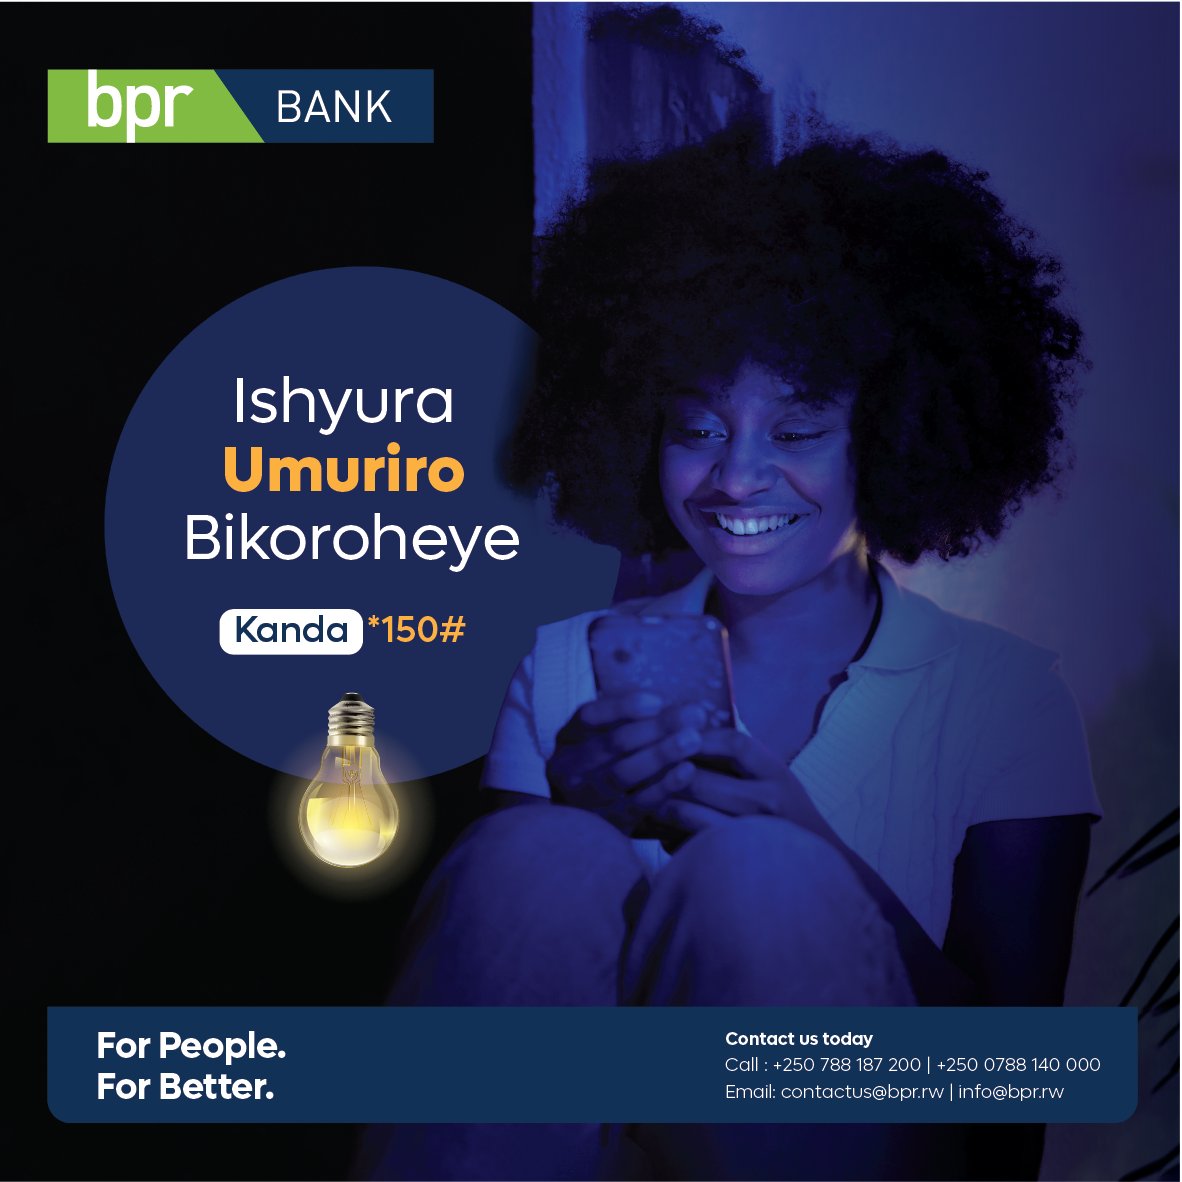 Komeza umurikire inzu yawe wishyura amashanyarazo bitakugoye ukoresheje BPR Mobi bank. Kanda *150# cyangwa udawunulodinge porogaramu ya BPR Mobi App. #ForPeopleForBetter #MobileBanking #BPRniIyawe